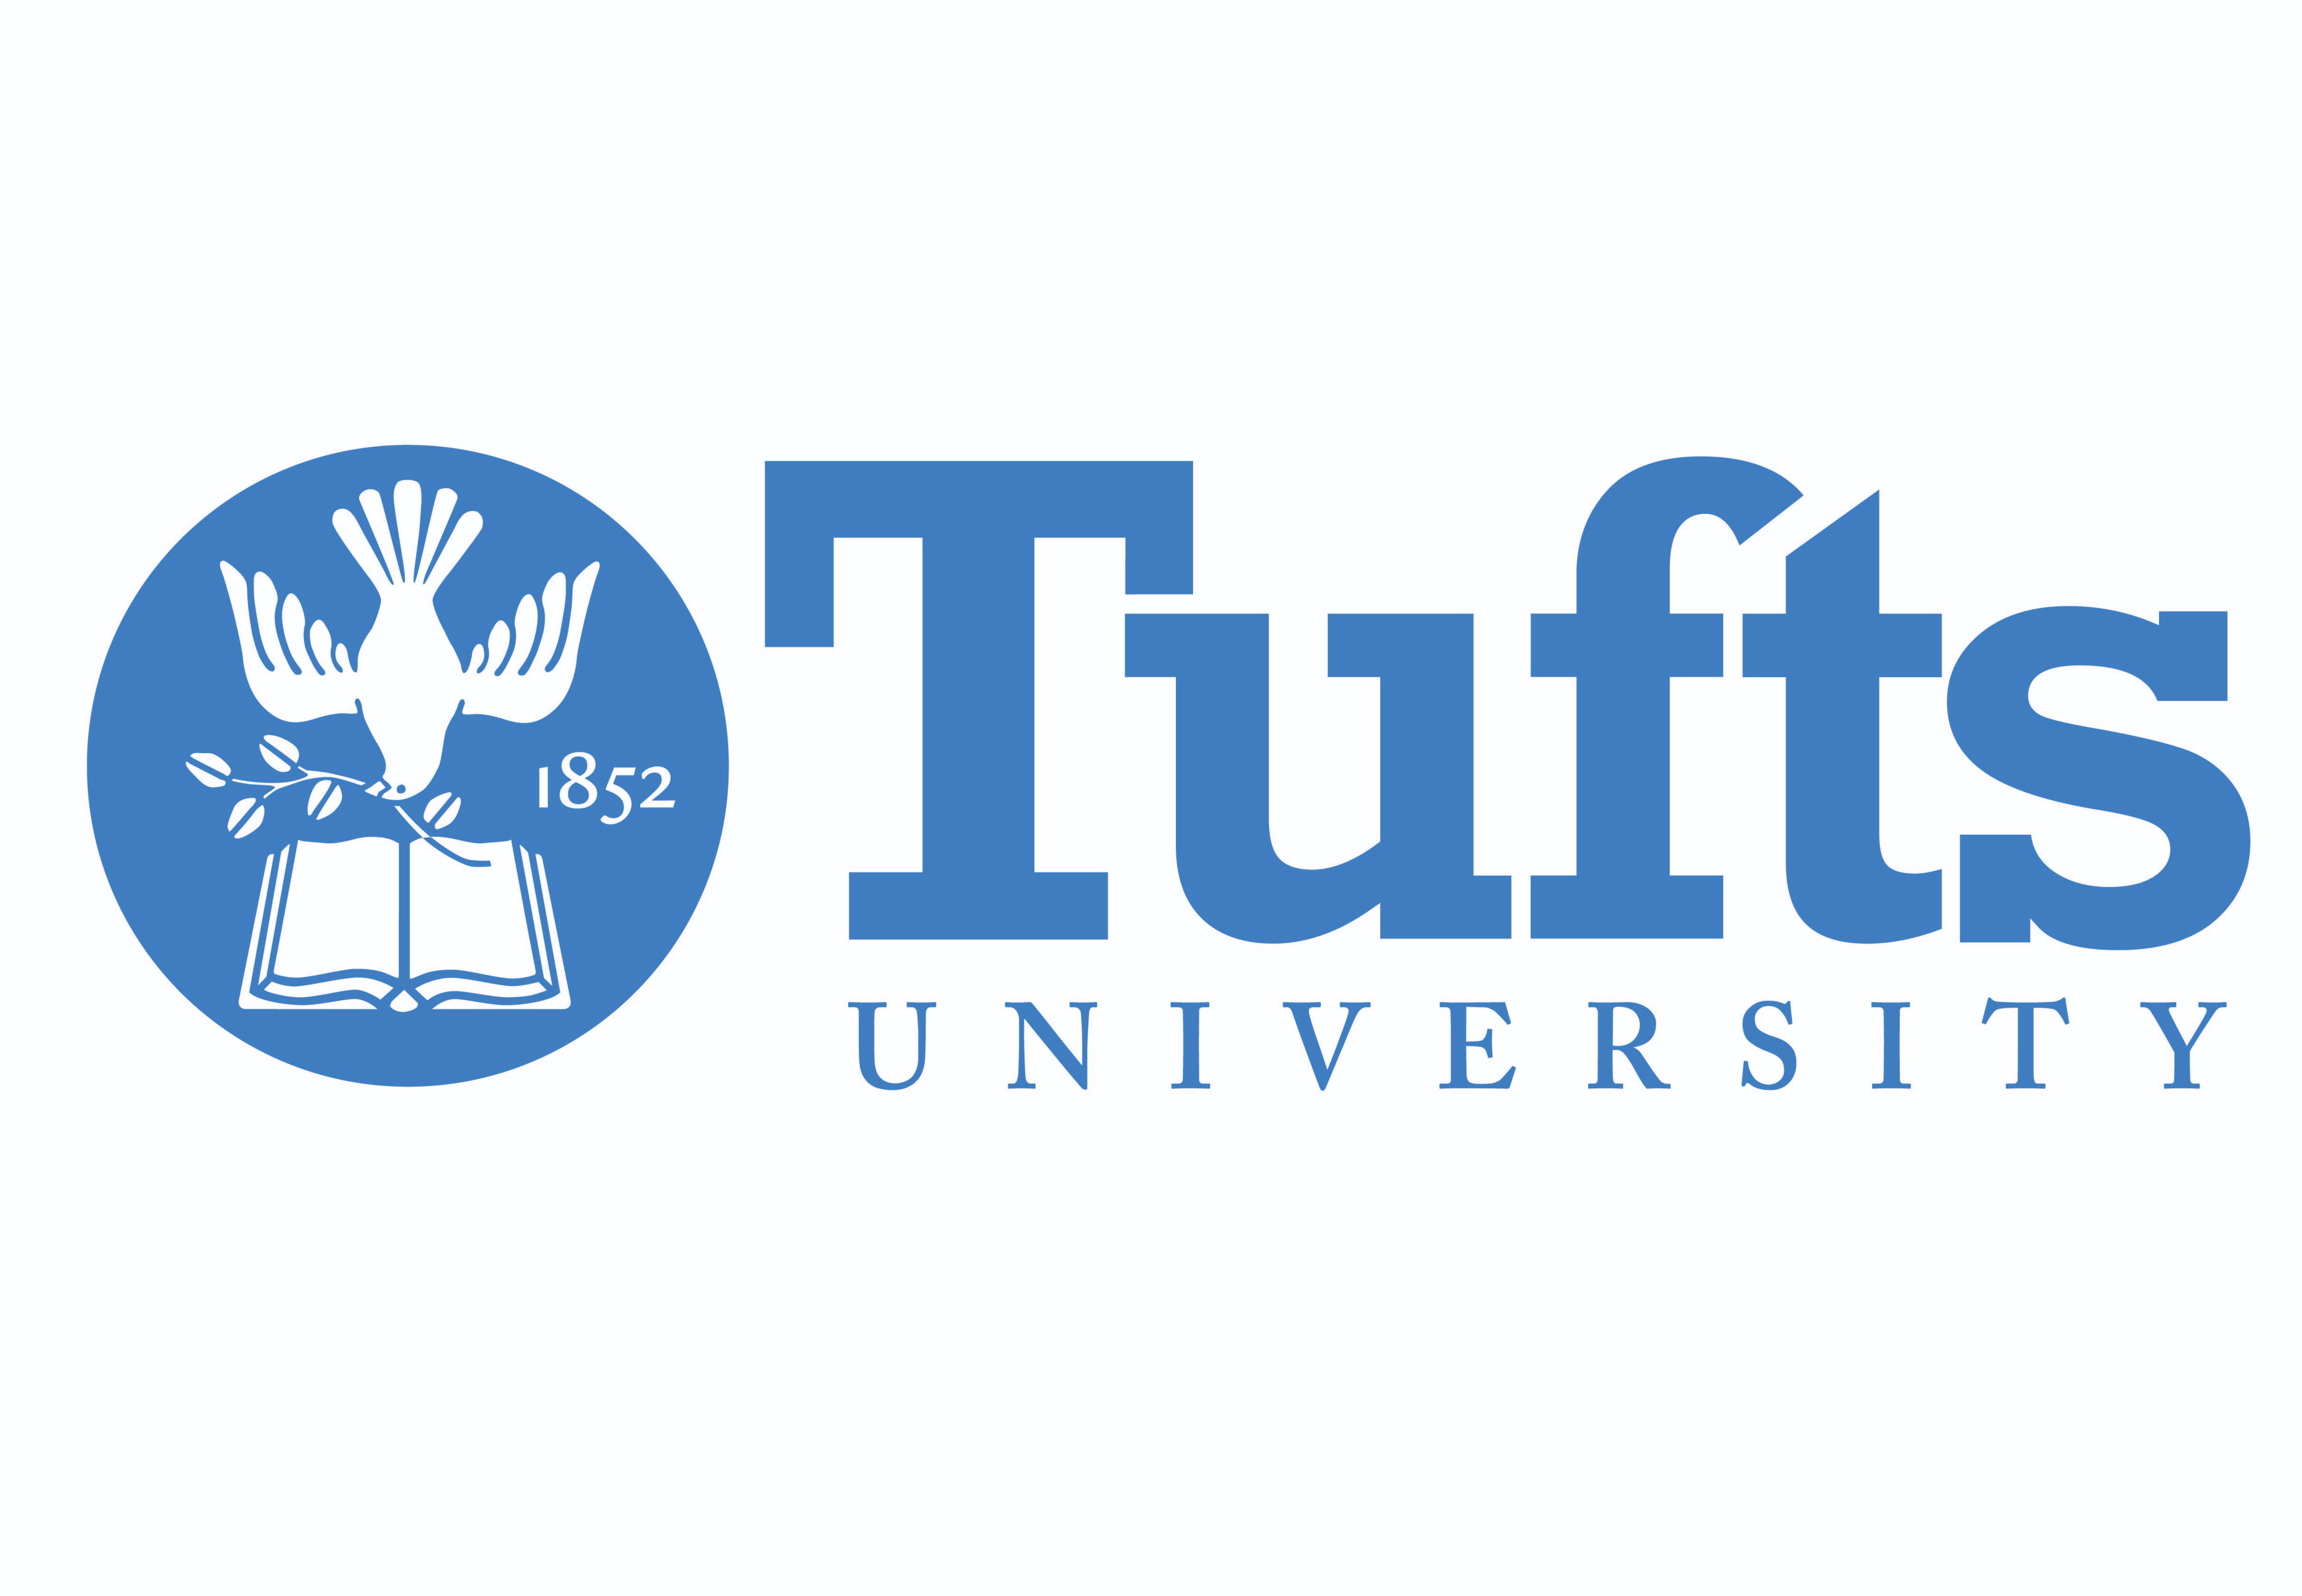 Tufts-University